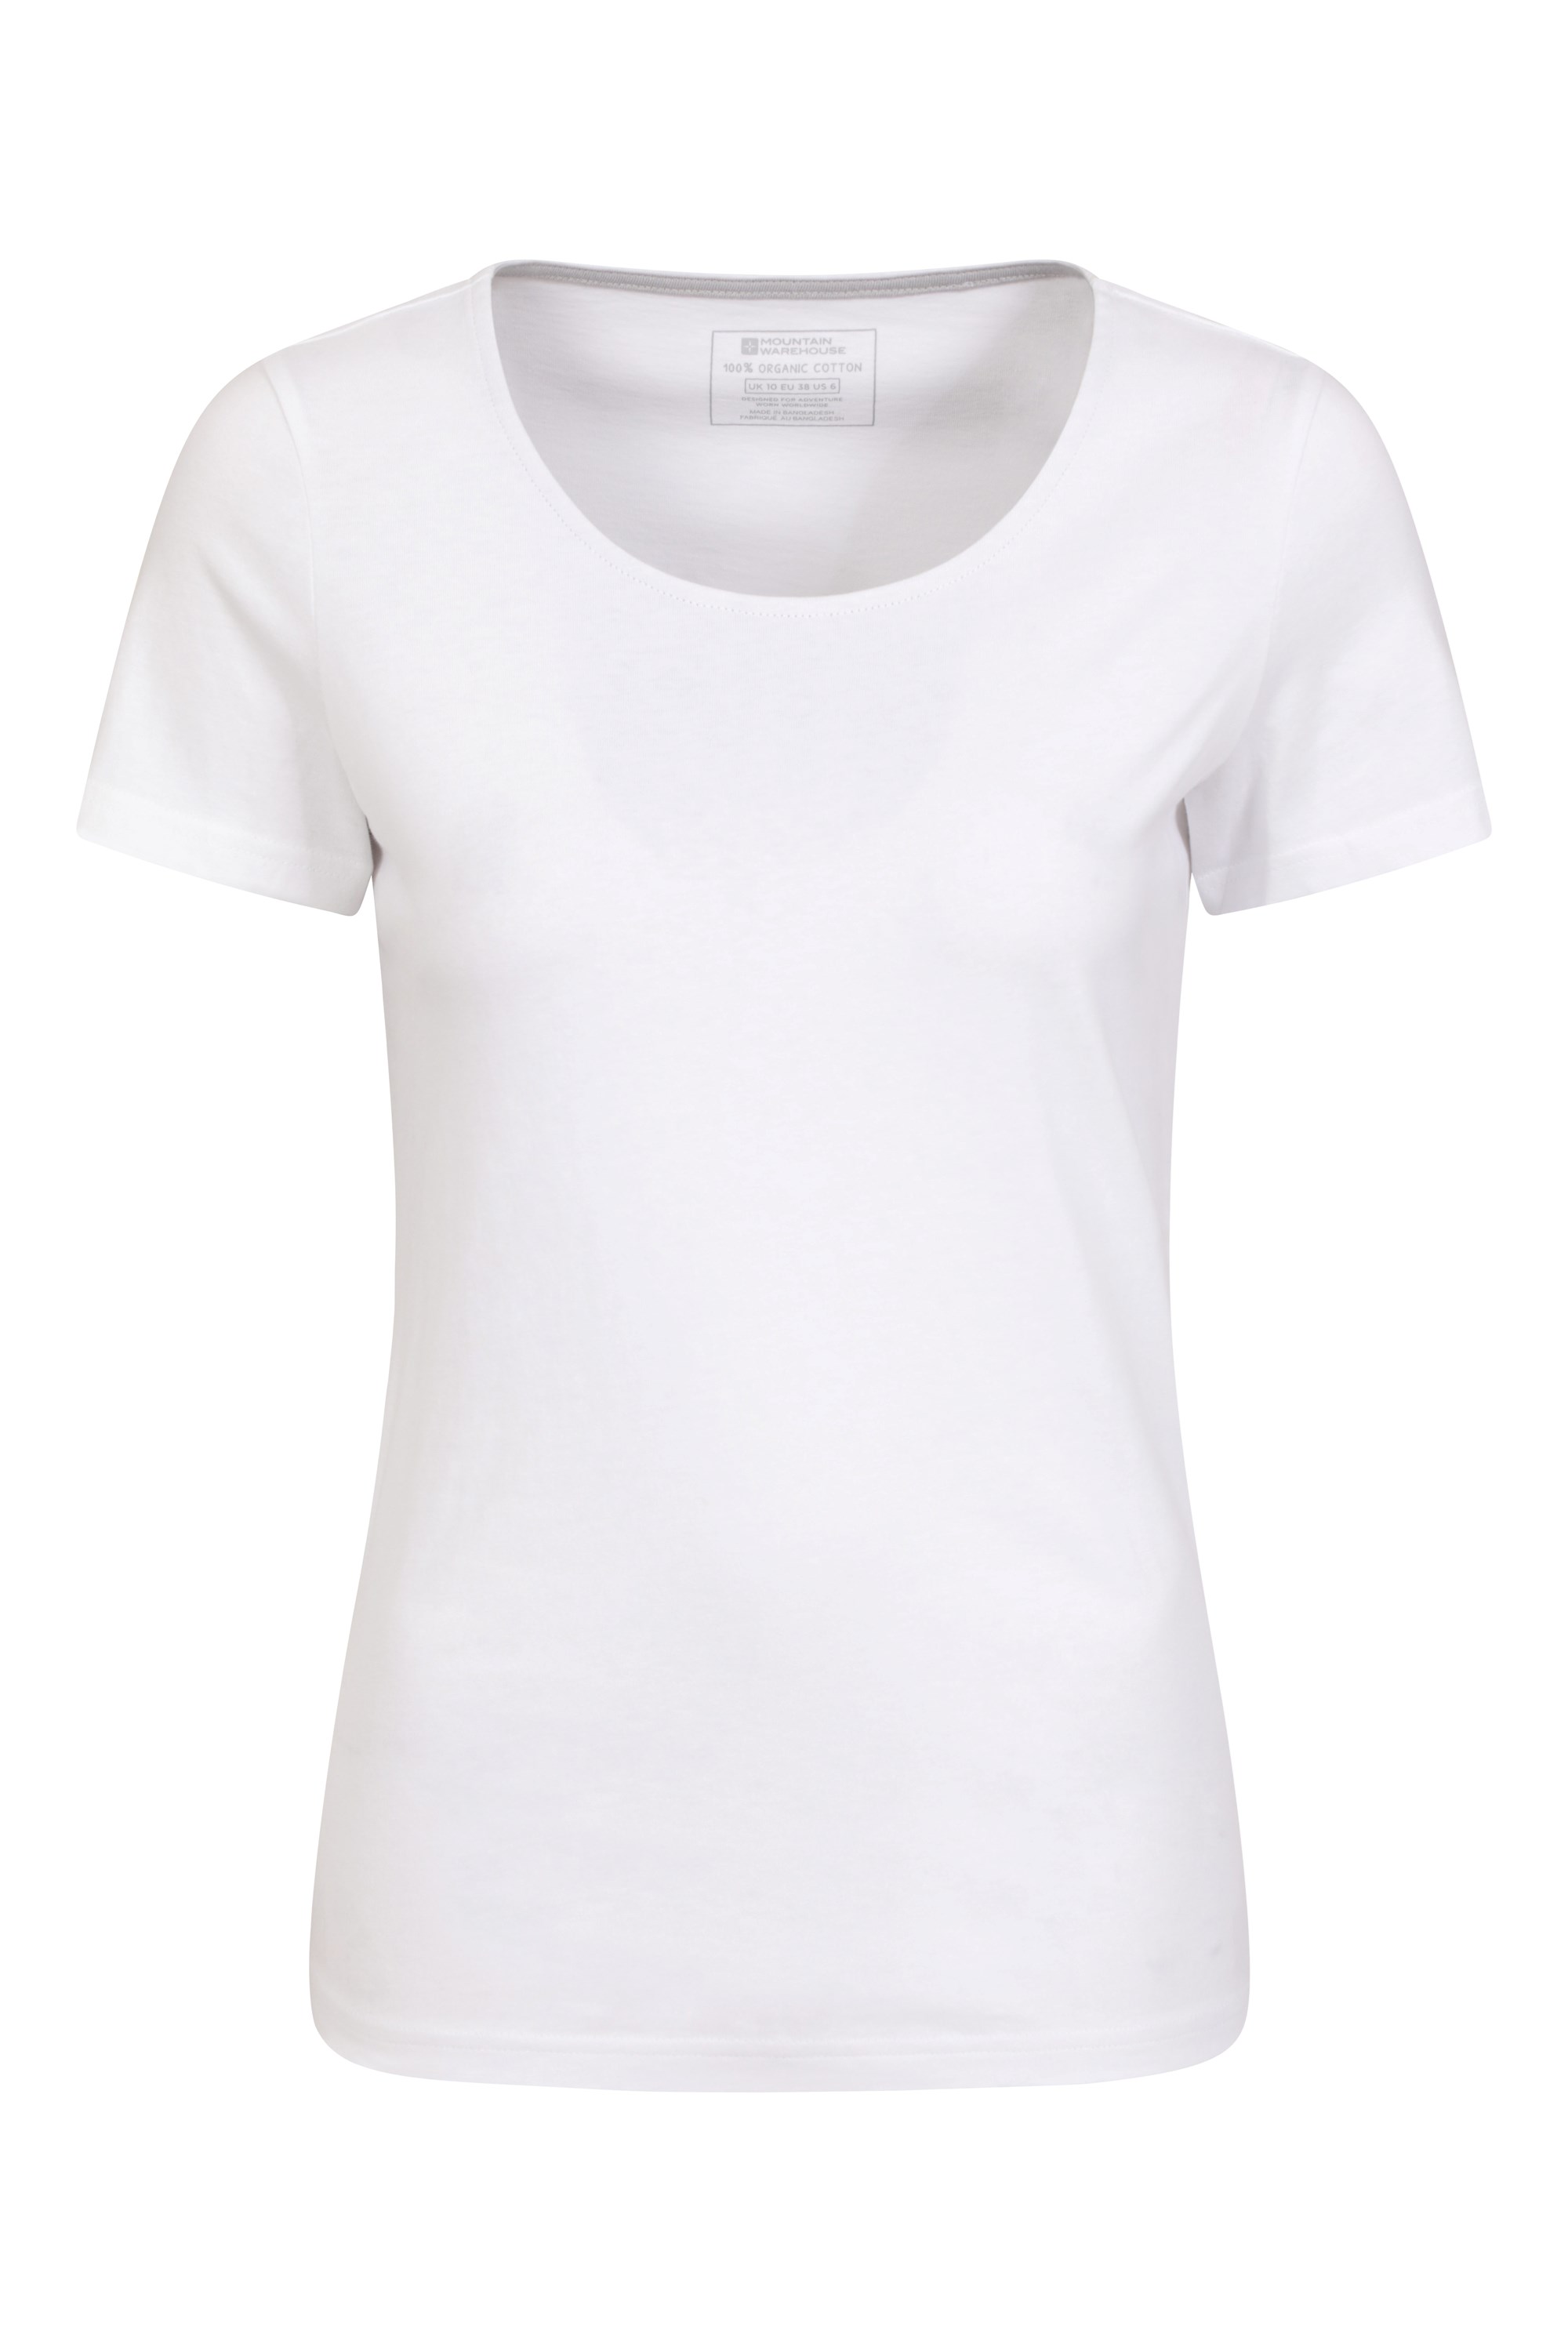 Eden Womens Organic Round Neck T-shirt - White